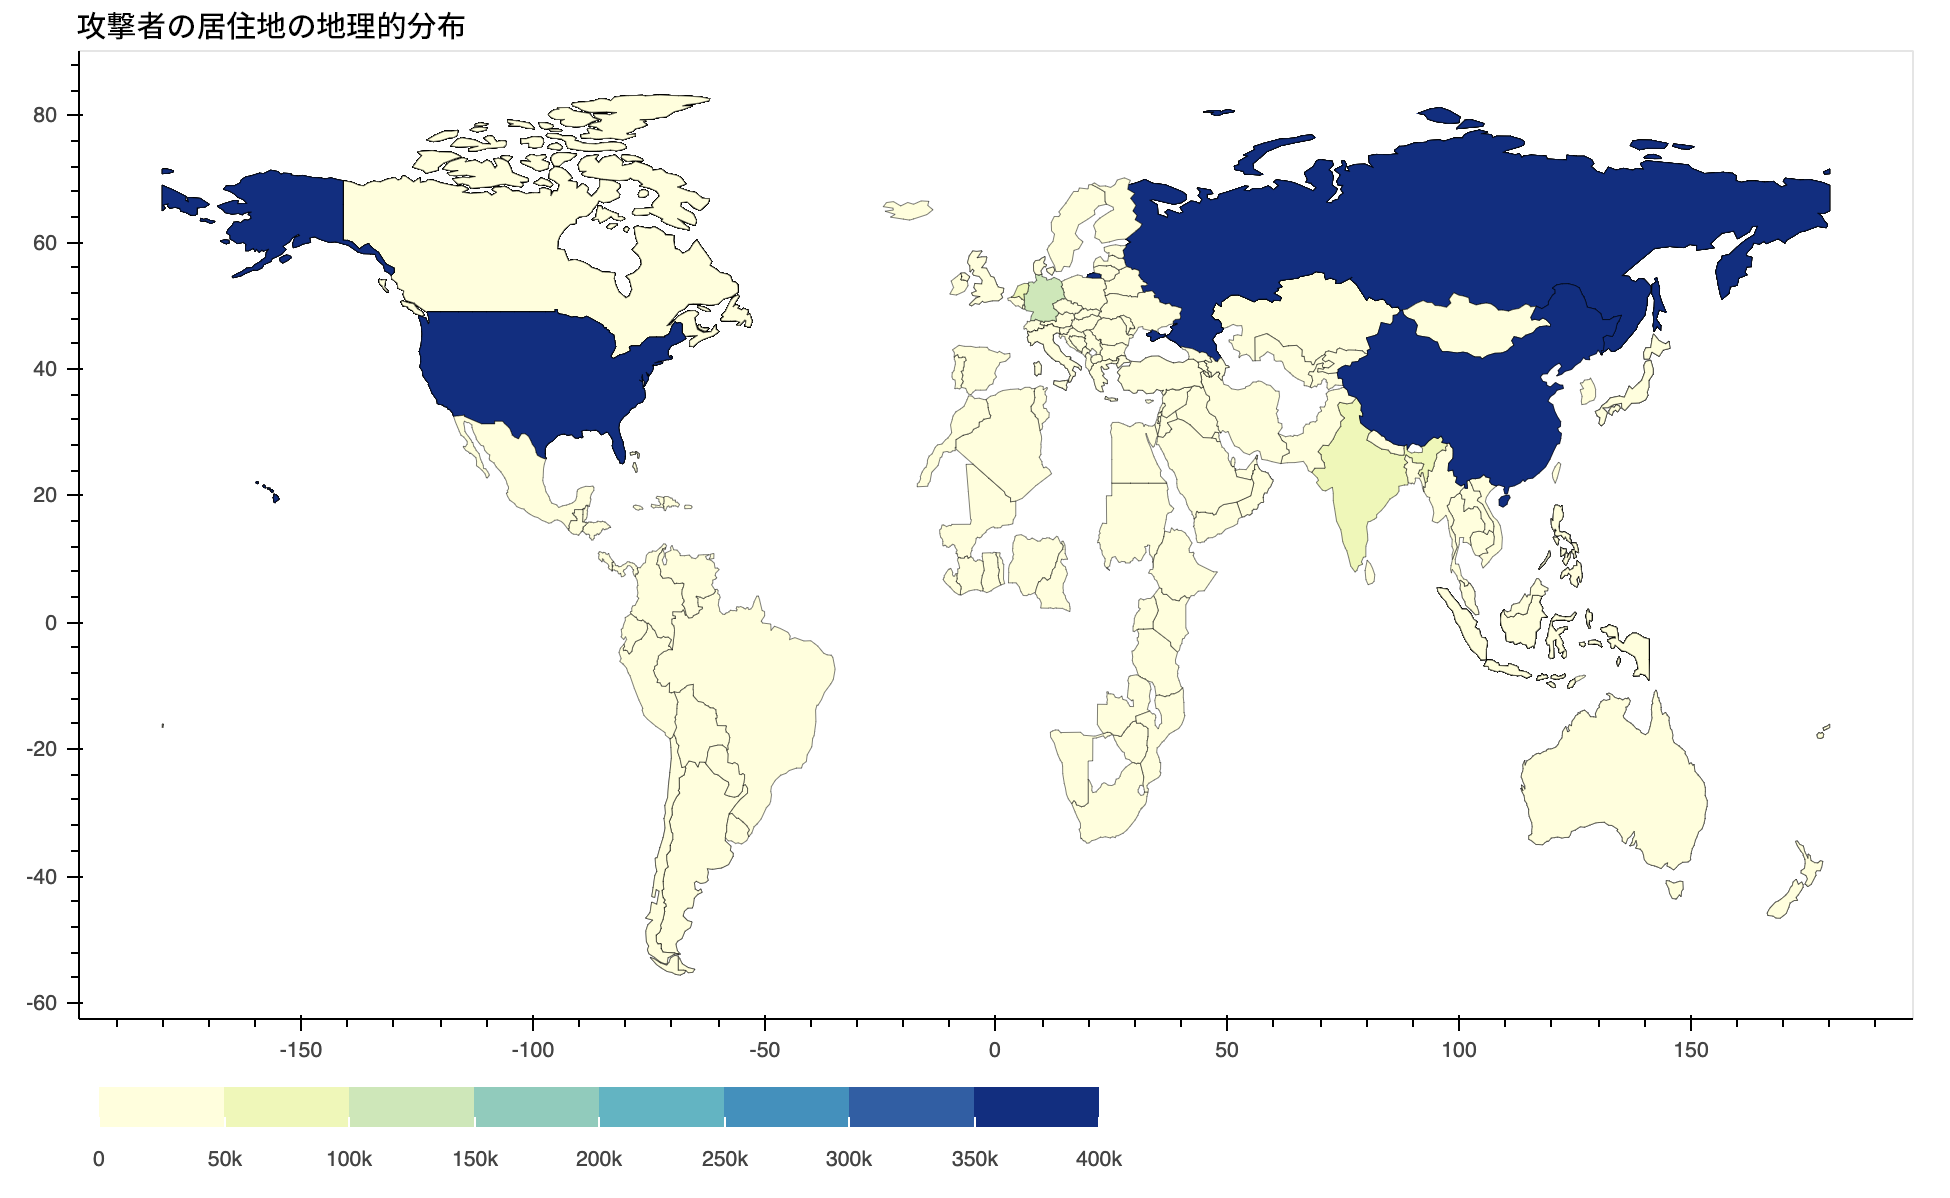 「Attacker Geographical Location Distribution(攻撃者の地域分布)」という表題の地図の画像。色の濃い部分が上位の国(ロシア、米国、中国)を示しています。 